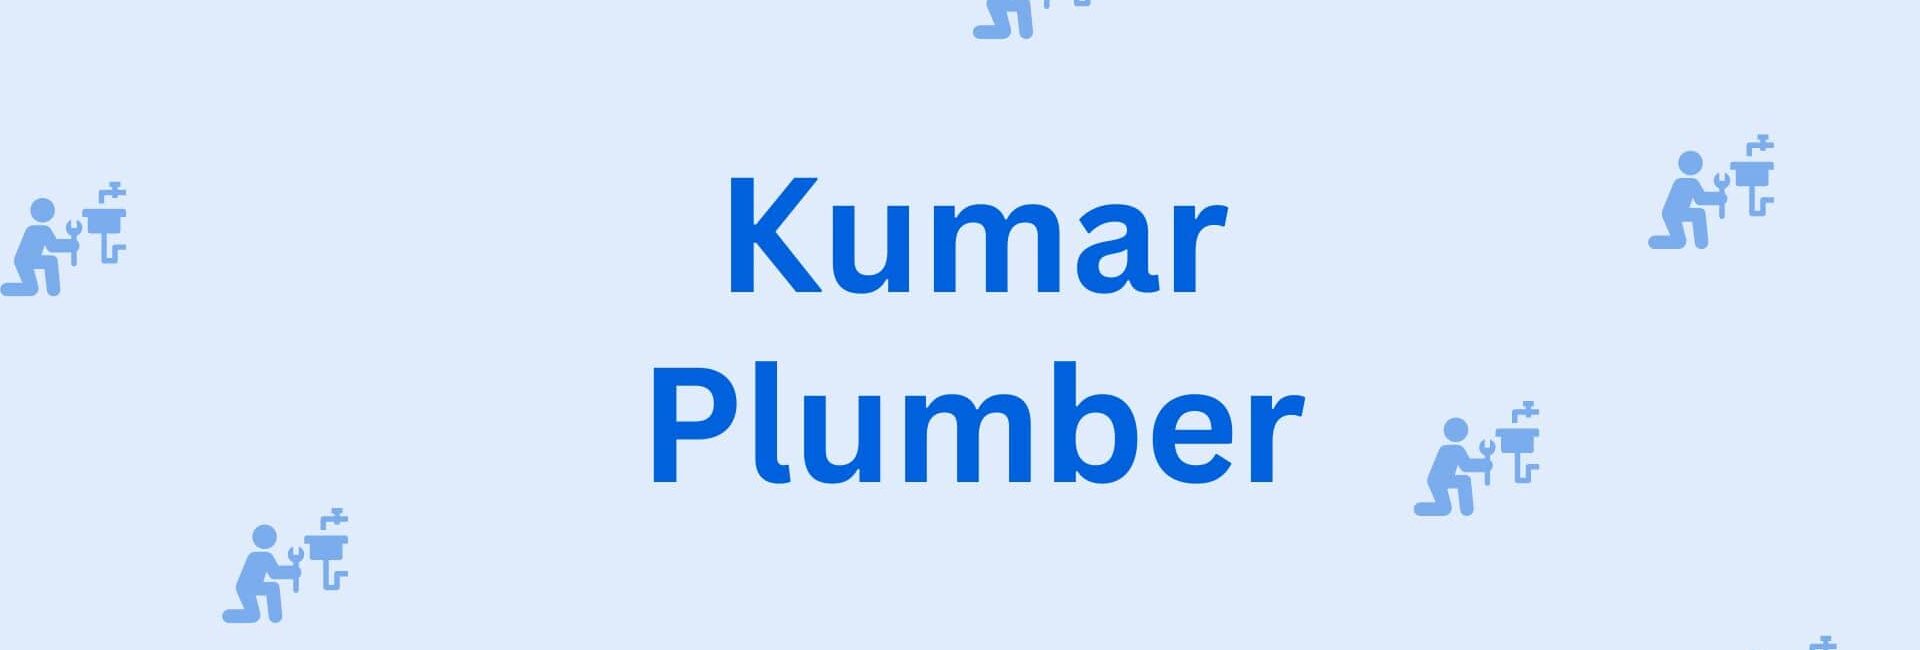 Kumar Plumber - Plumber Contractor In Hisar